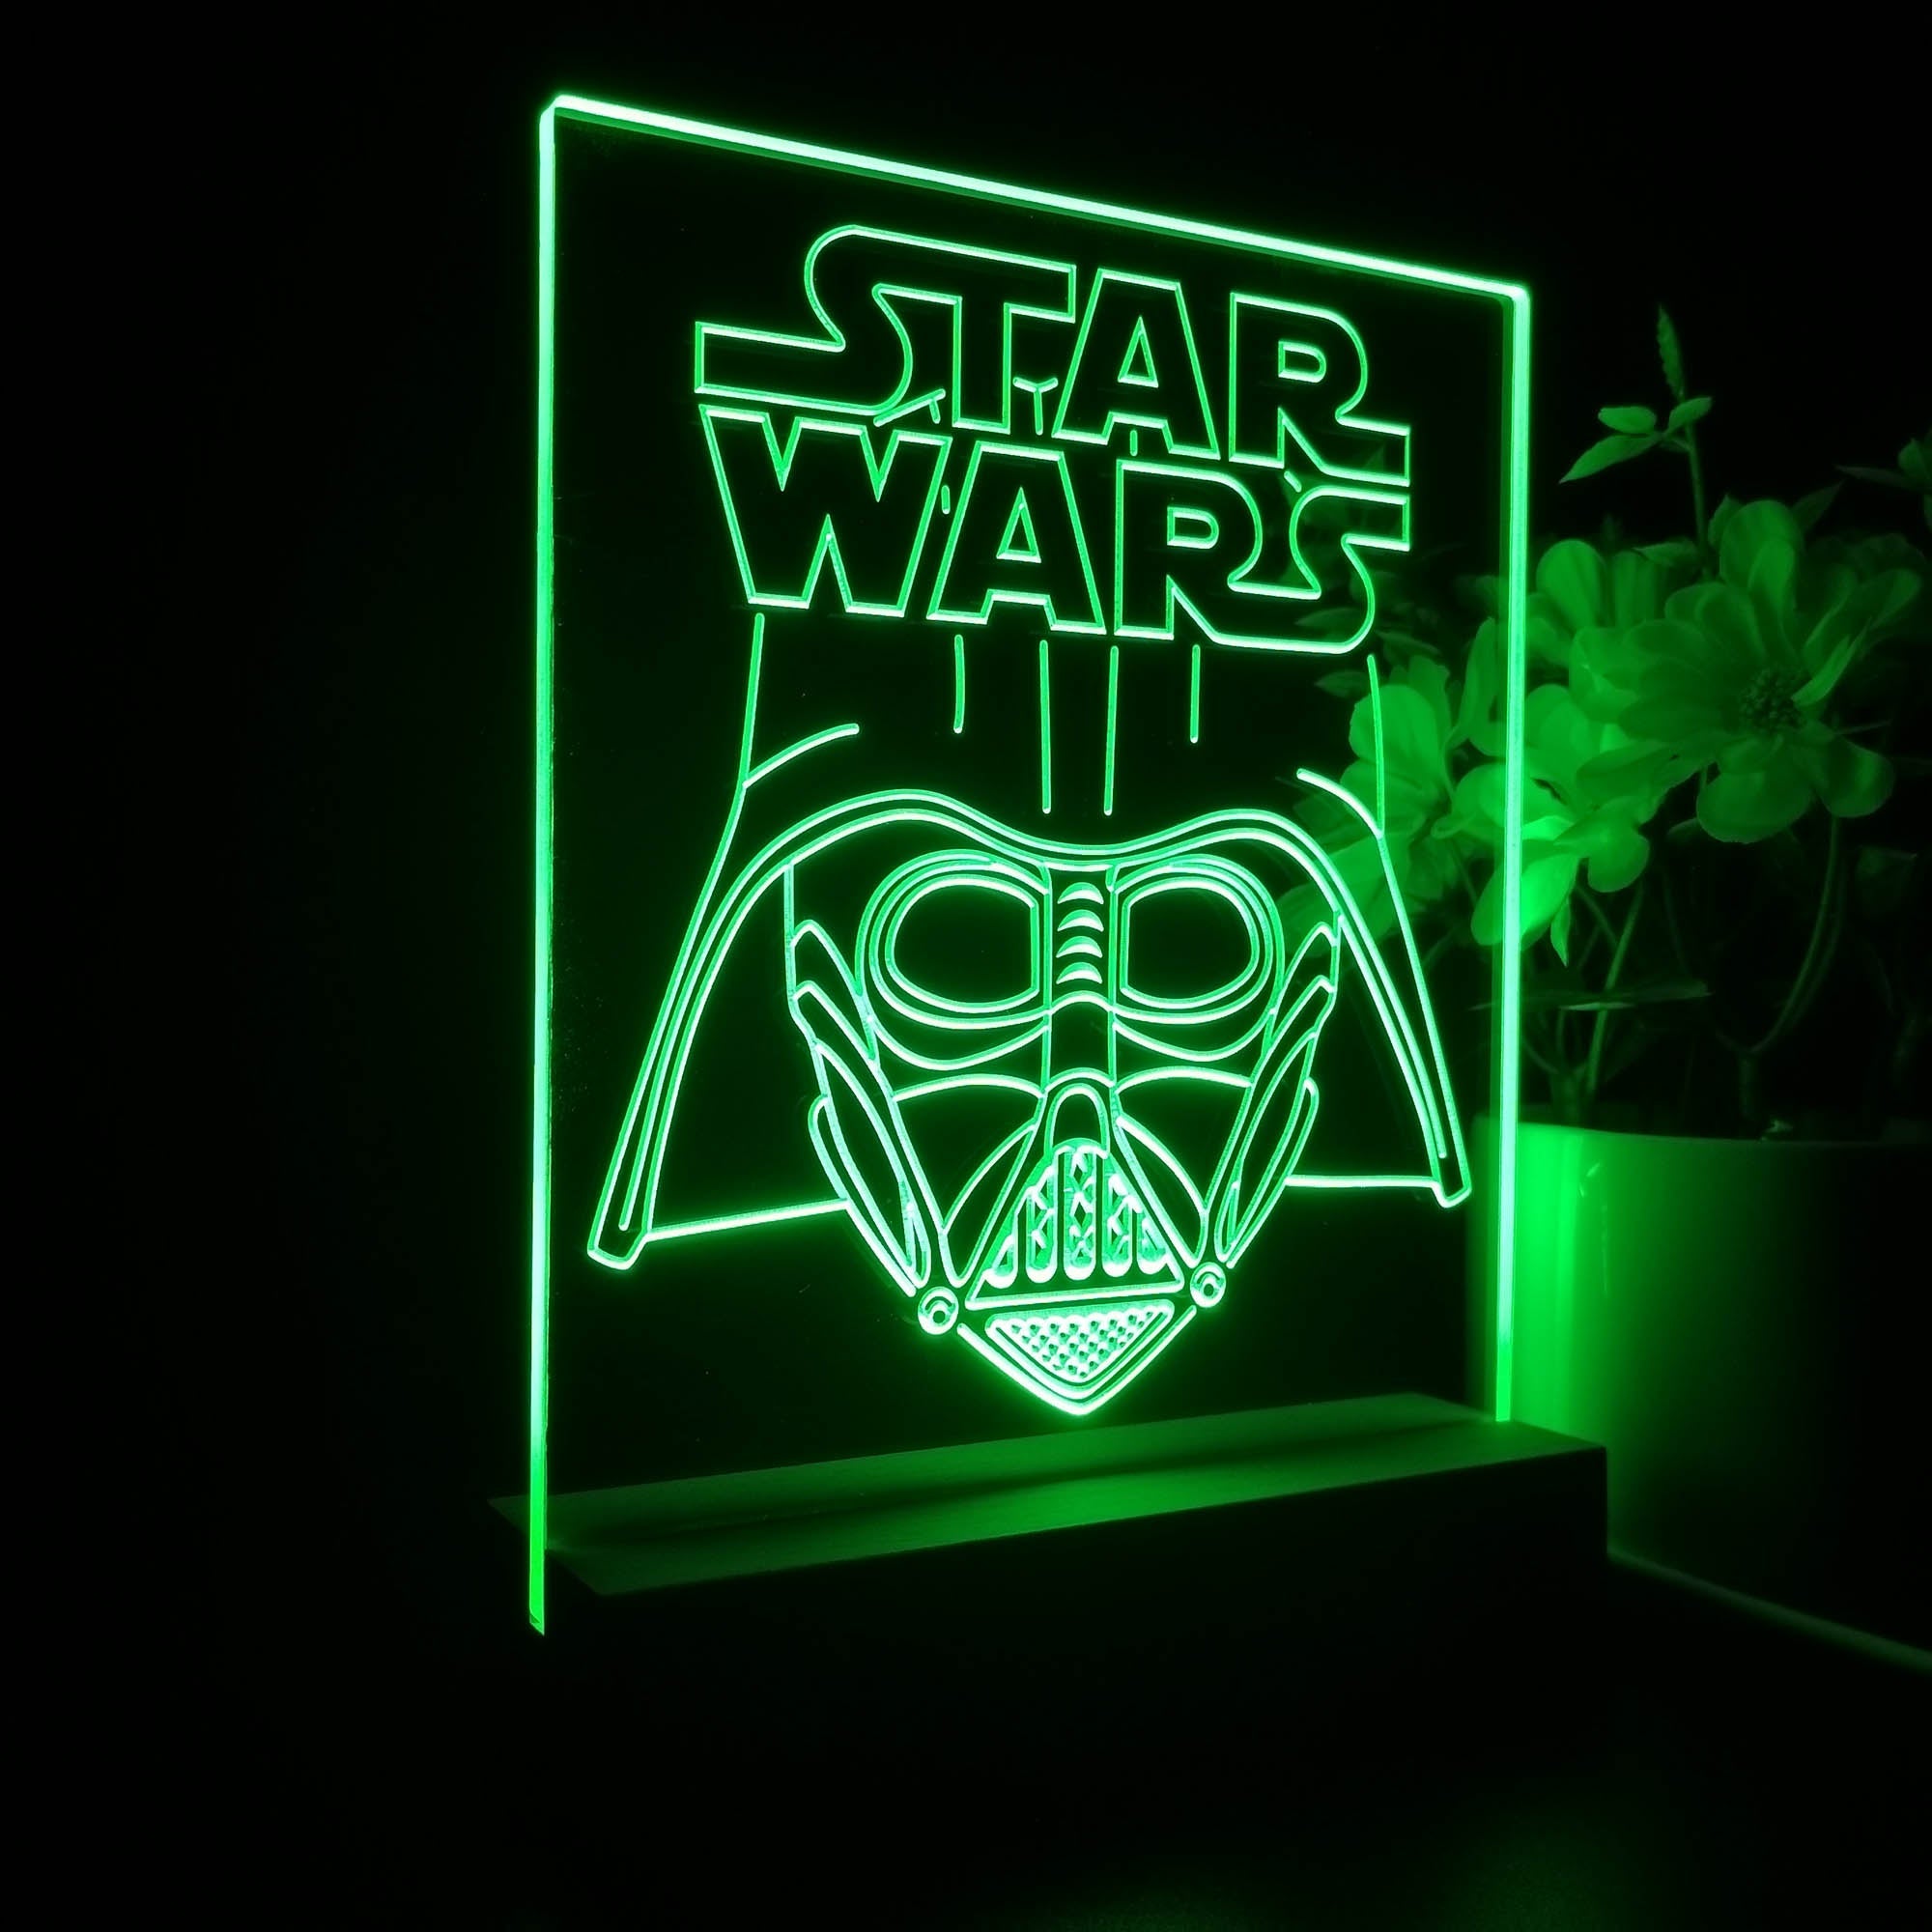 Stars Wars Darth Vader Home Theater 3D Illusion Night Light Desk Lamp